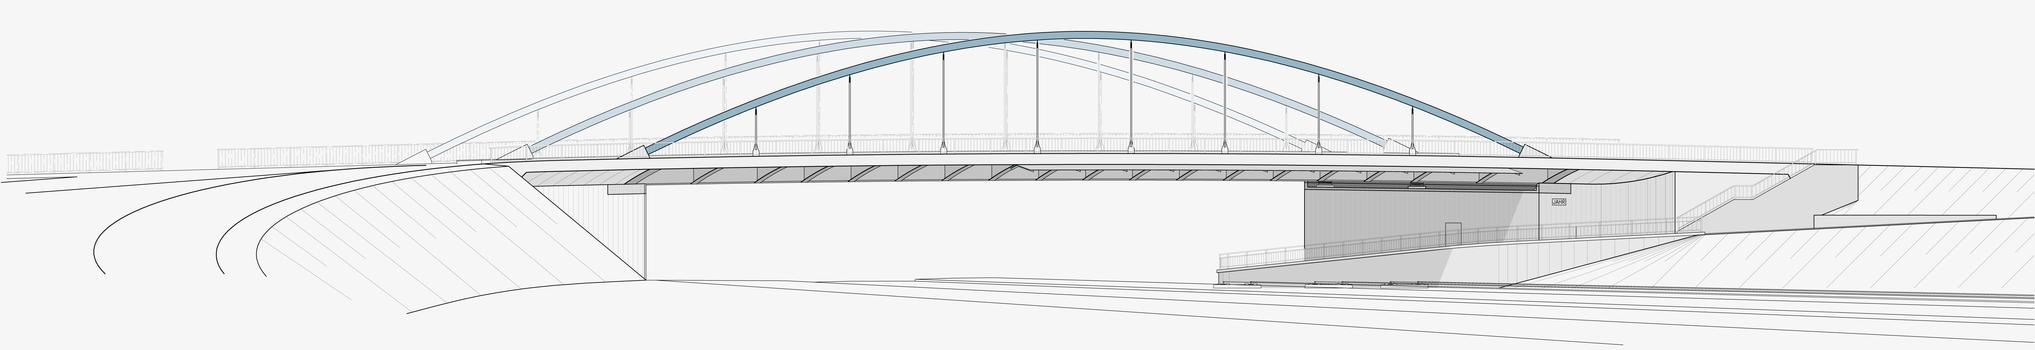 Riedbahnbrücke, Mannheim - élévation